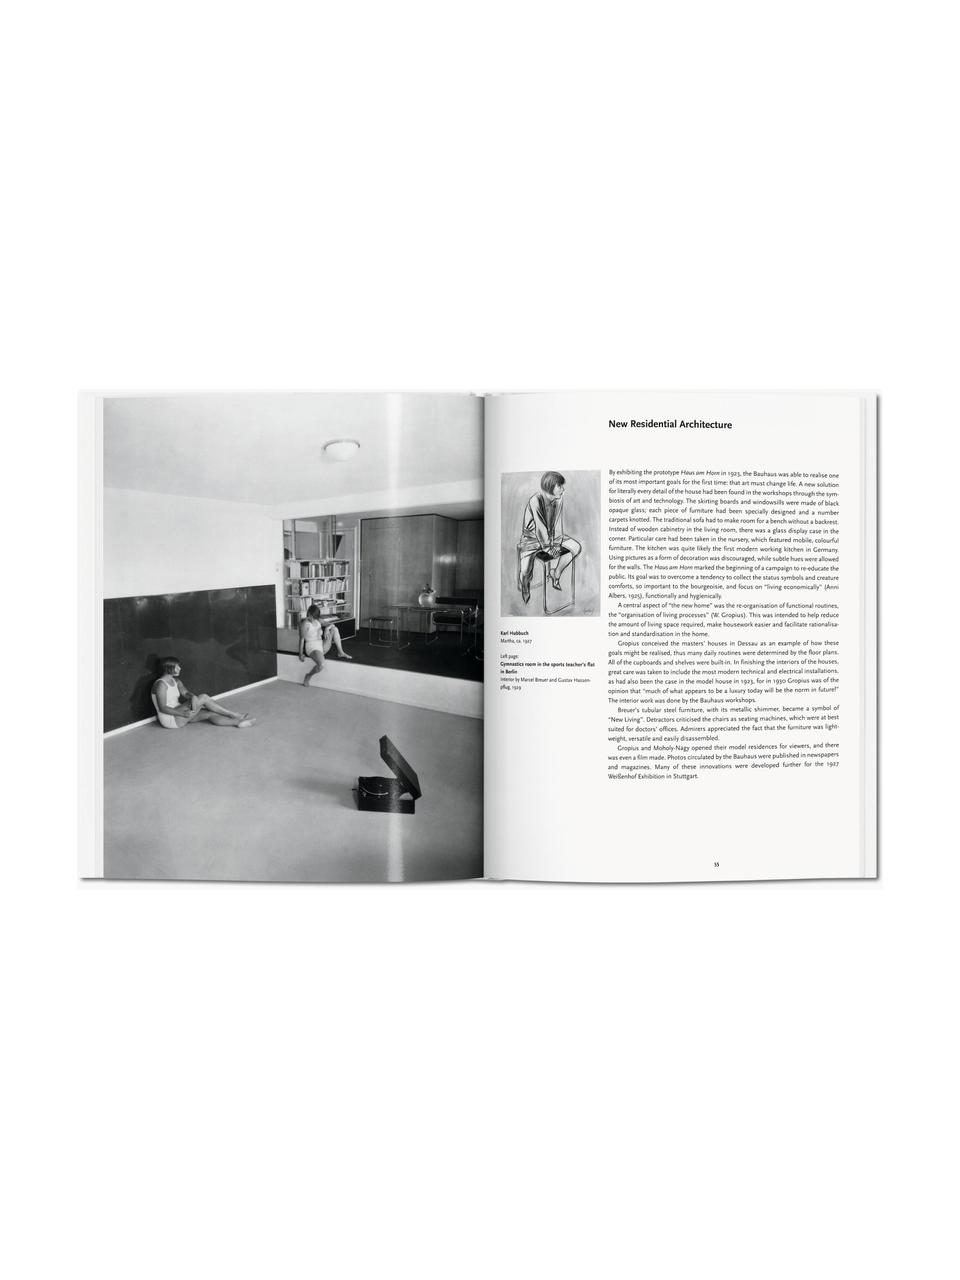 Ilustrovaná kniha Bauhaus, Papier, tvrdá väzba, Bauhaus, Š 21 x V 26 cm